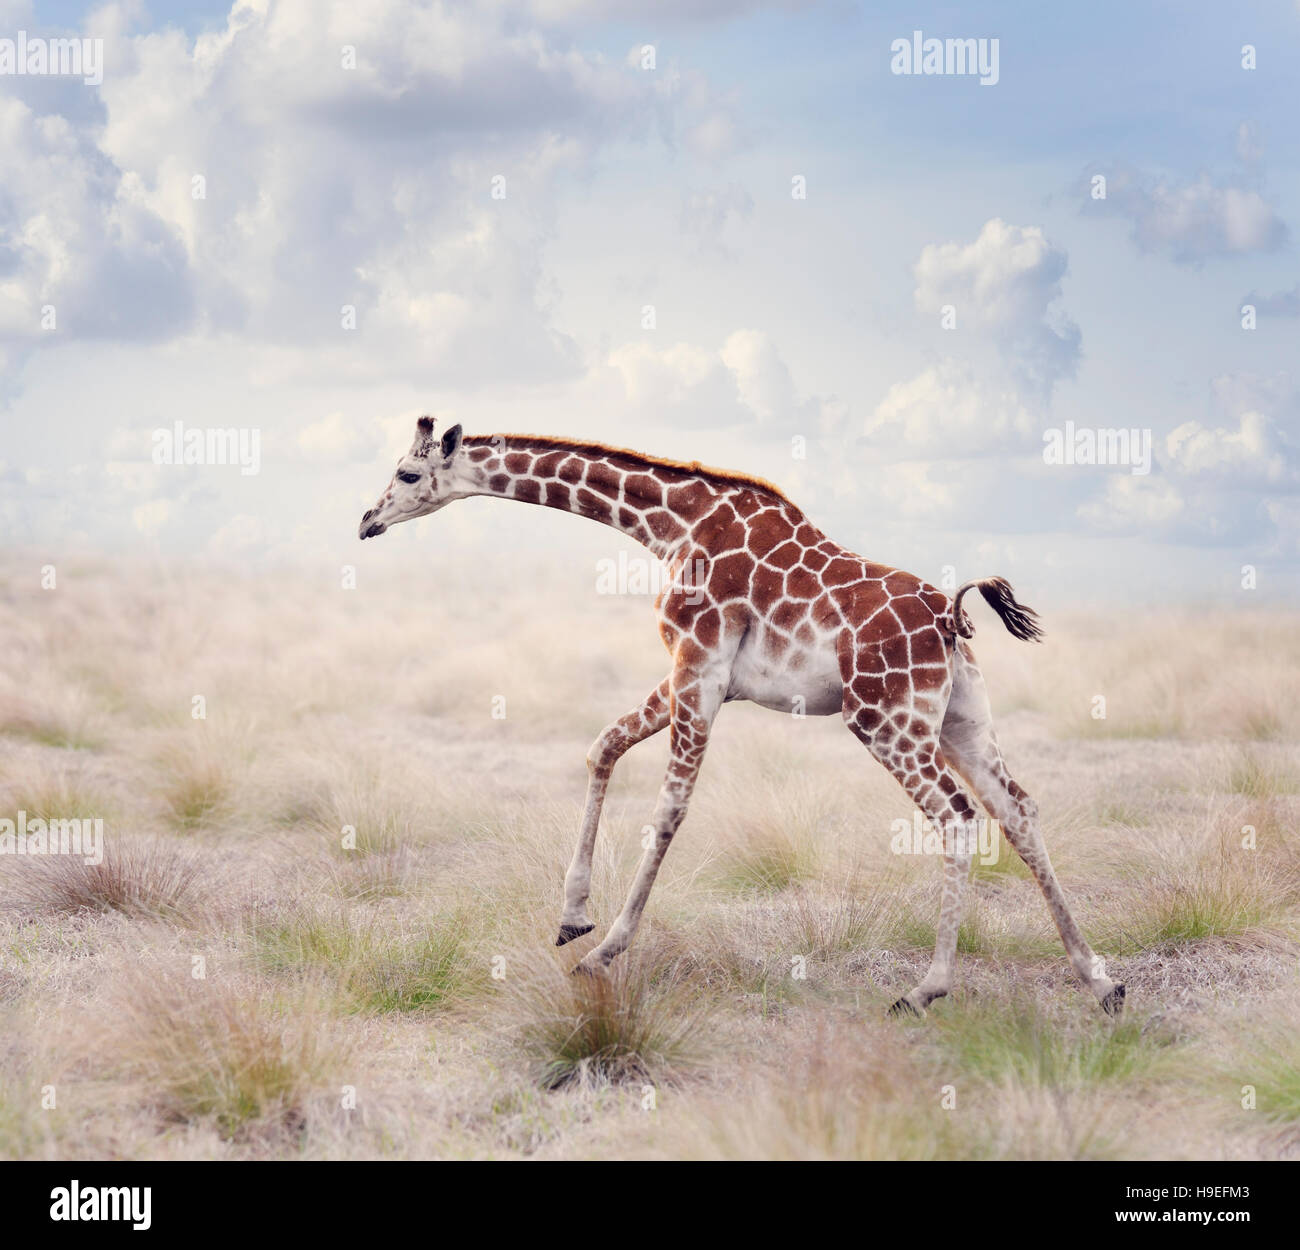 Young Giraffe Running in a Grassland Stock Photo